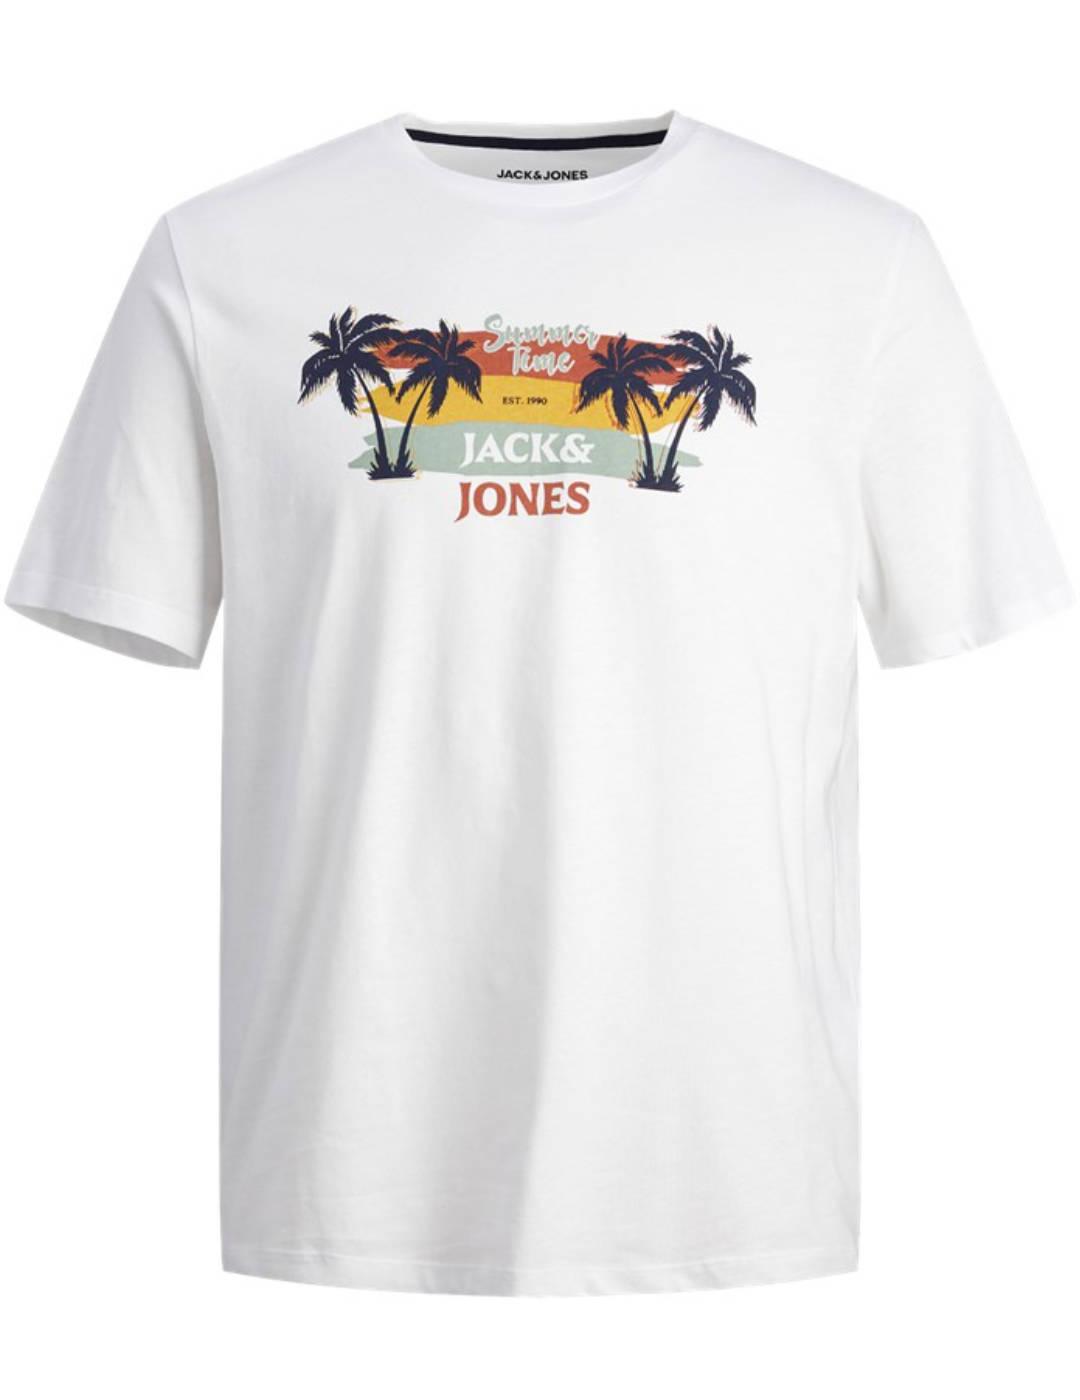 Camiseta Jack&Jones junior Summer blanca manga corta niño